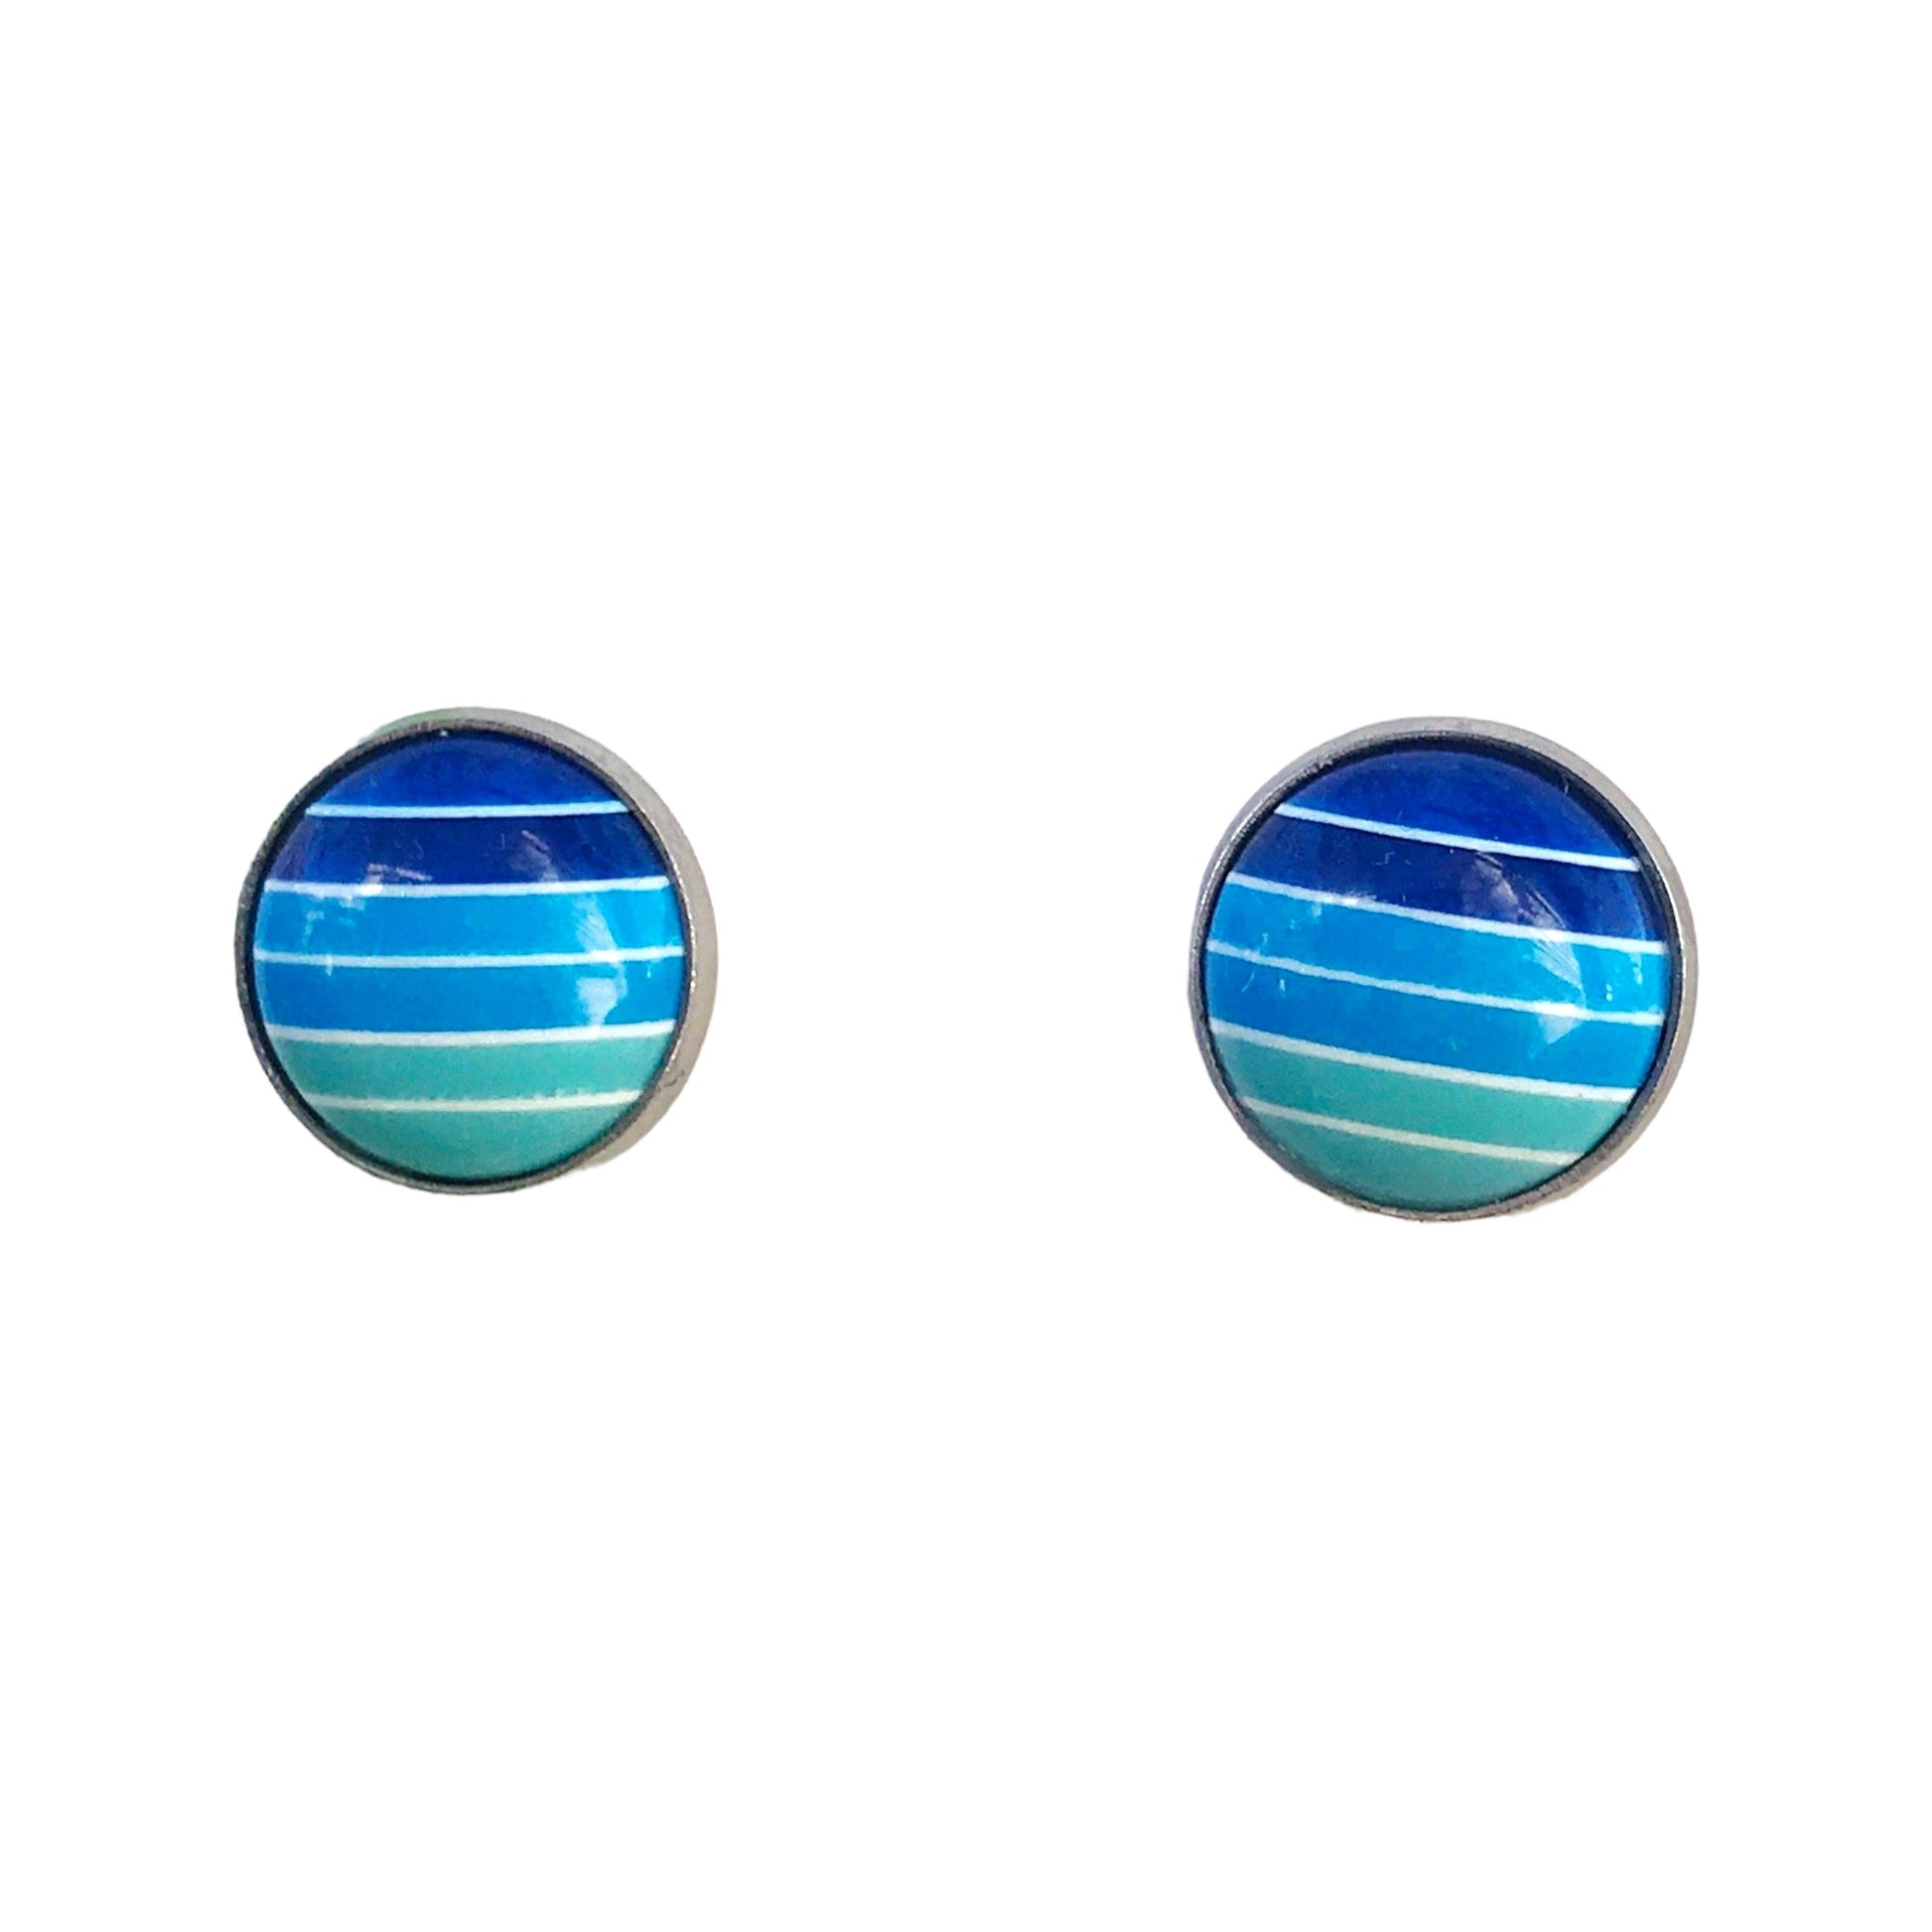 Blue Gradient Striped Earrings - Boho Chic Statement Jewelry